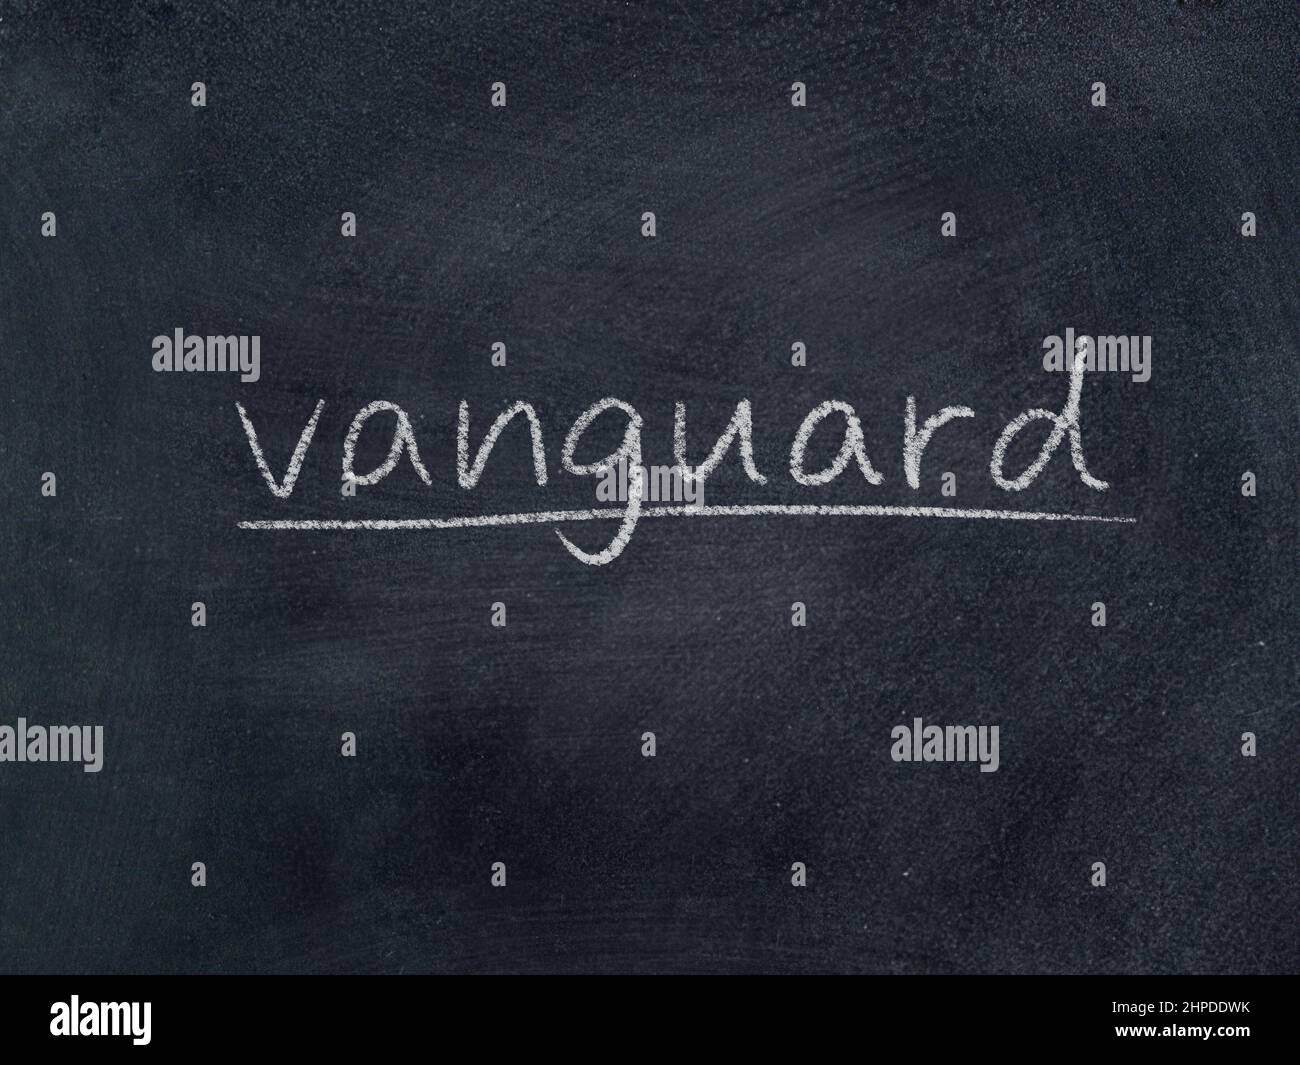 vanguard concept word on blackboard background Stock Photo